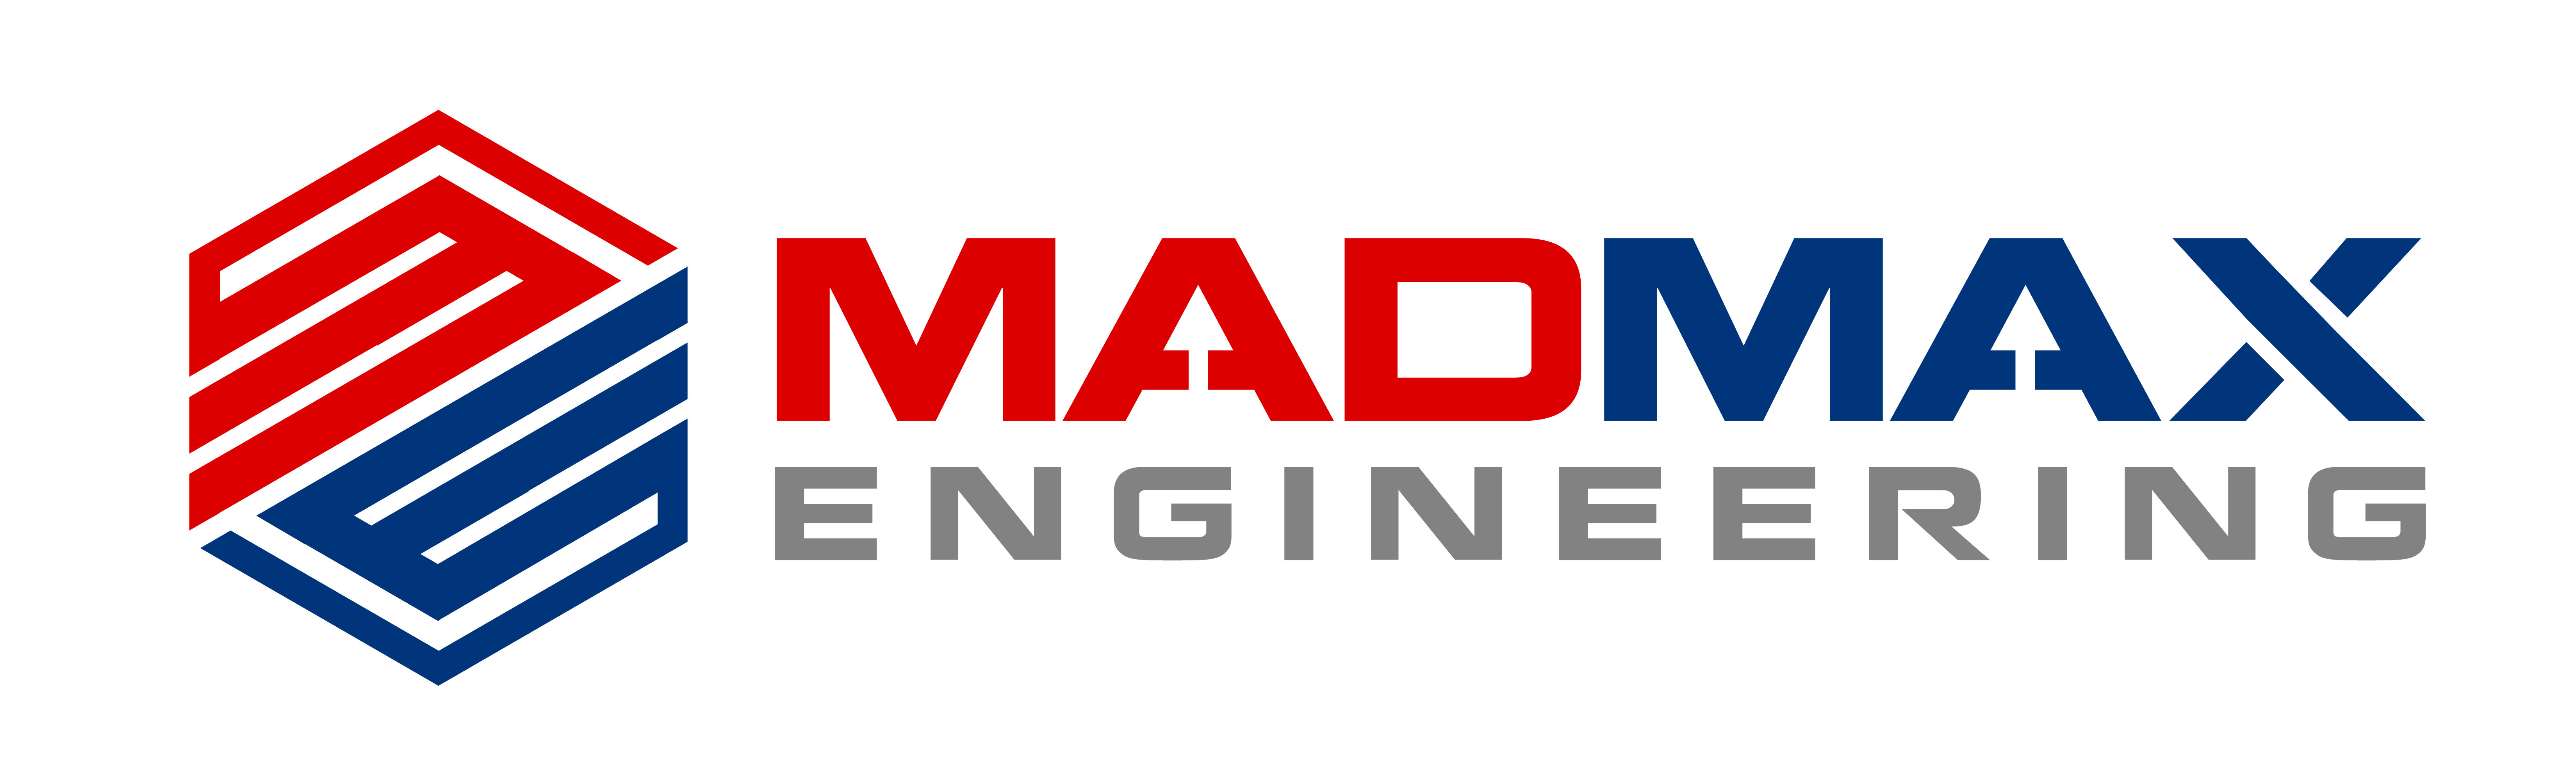 MAD MAX Engineering